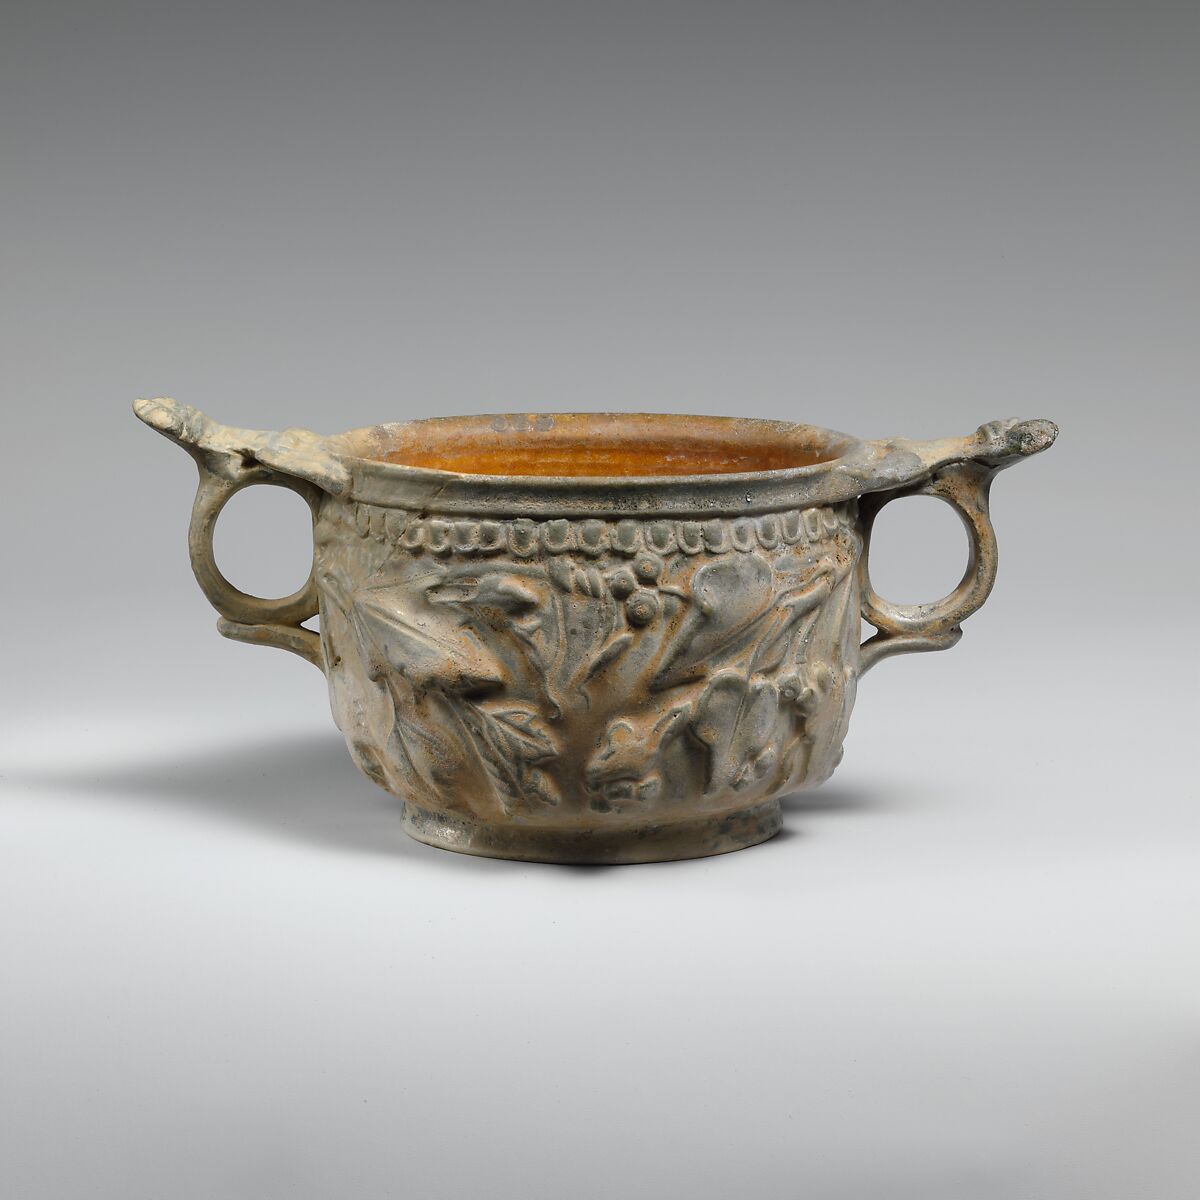 Terracotta lead-glazed scyphus (drinking cup), Terracotta, Roman 